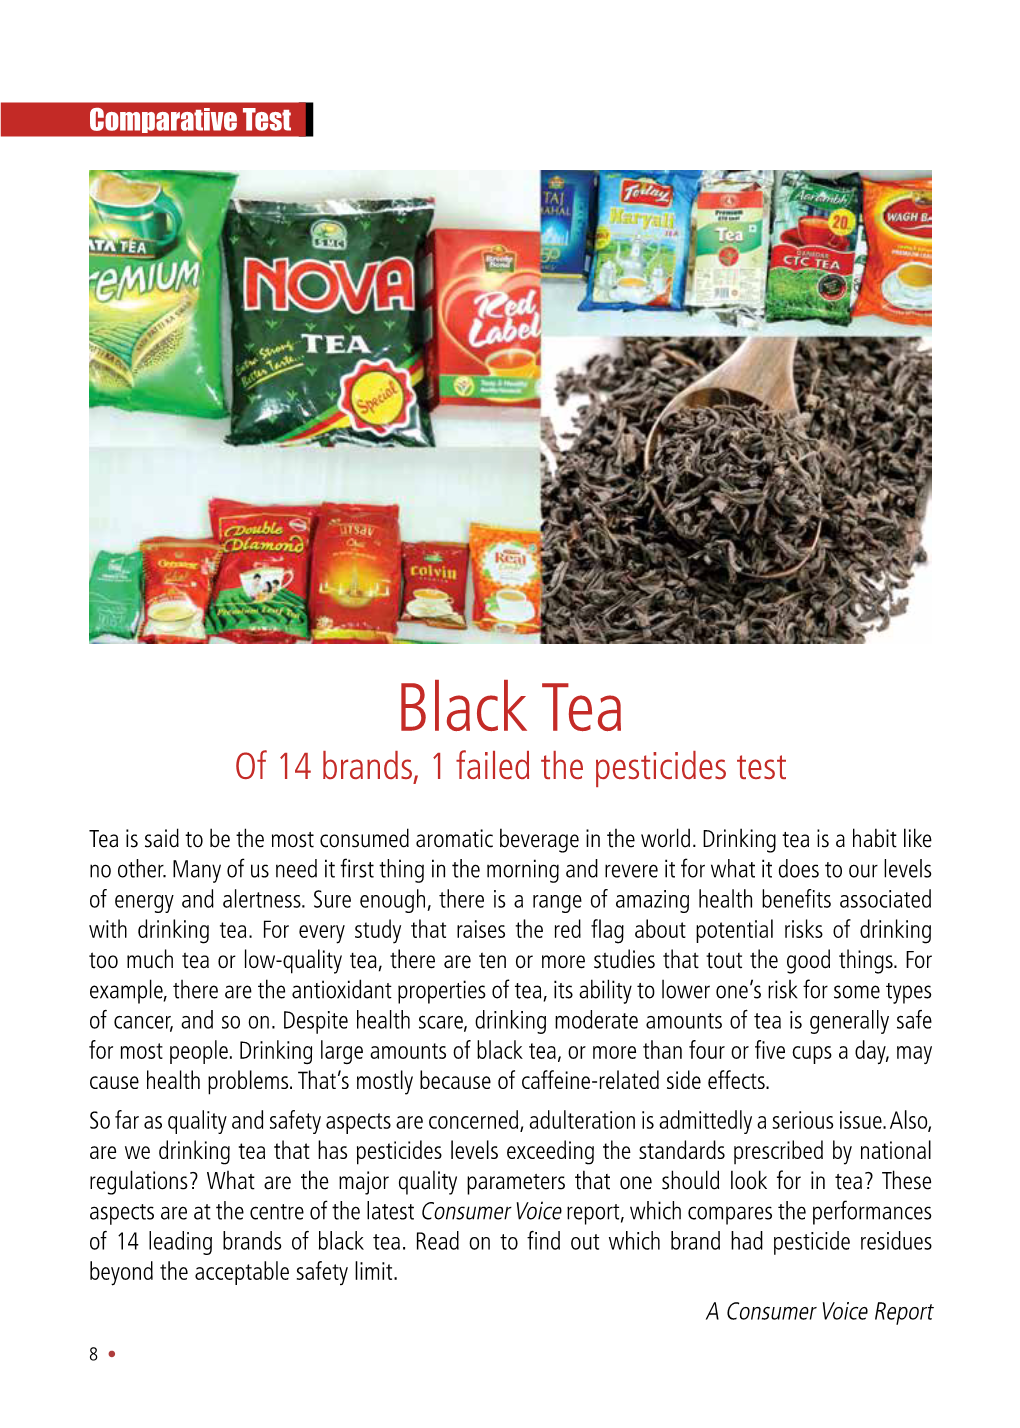 Black Tea of 14 Brands, 1 Failed the Pesticides Test